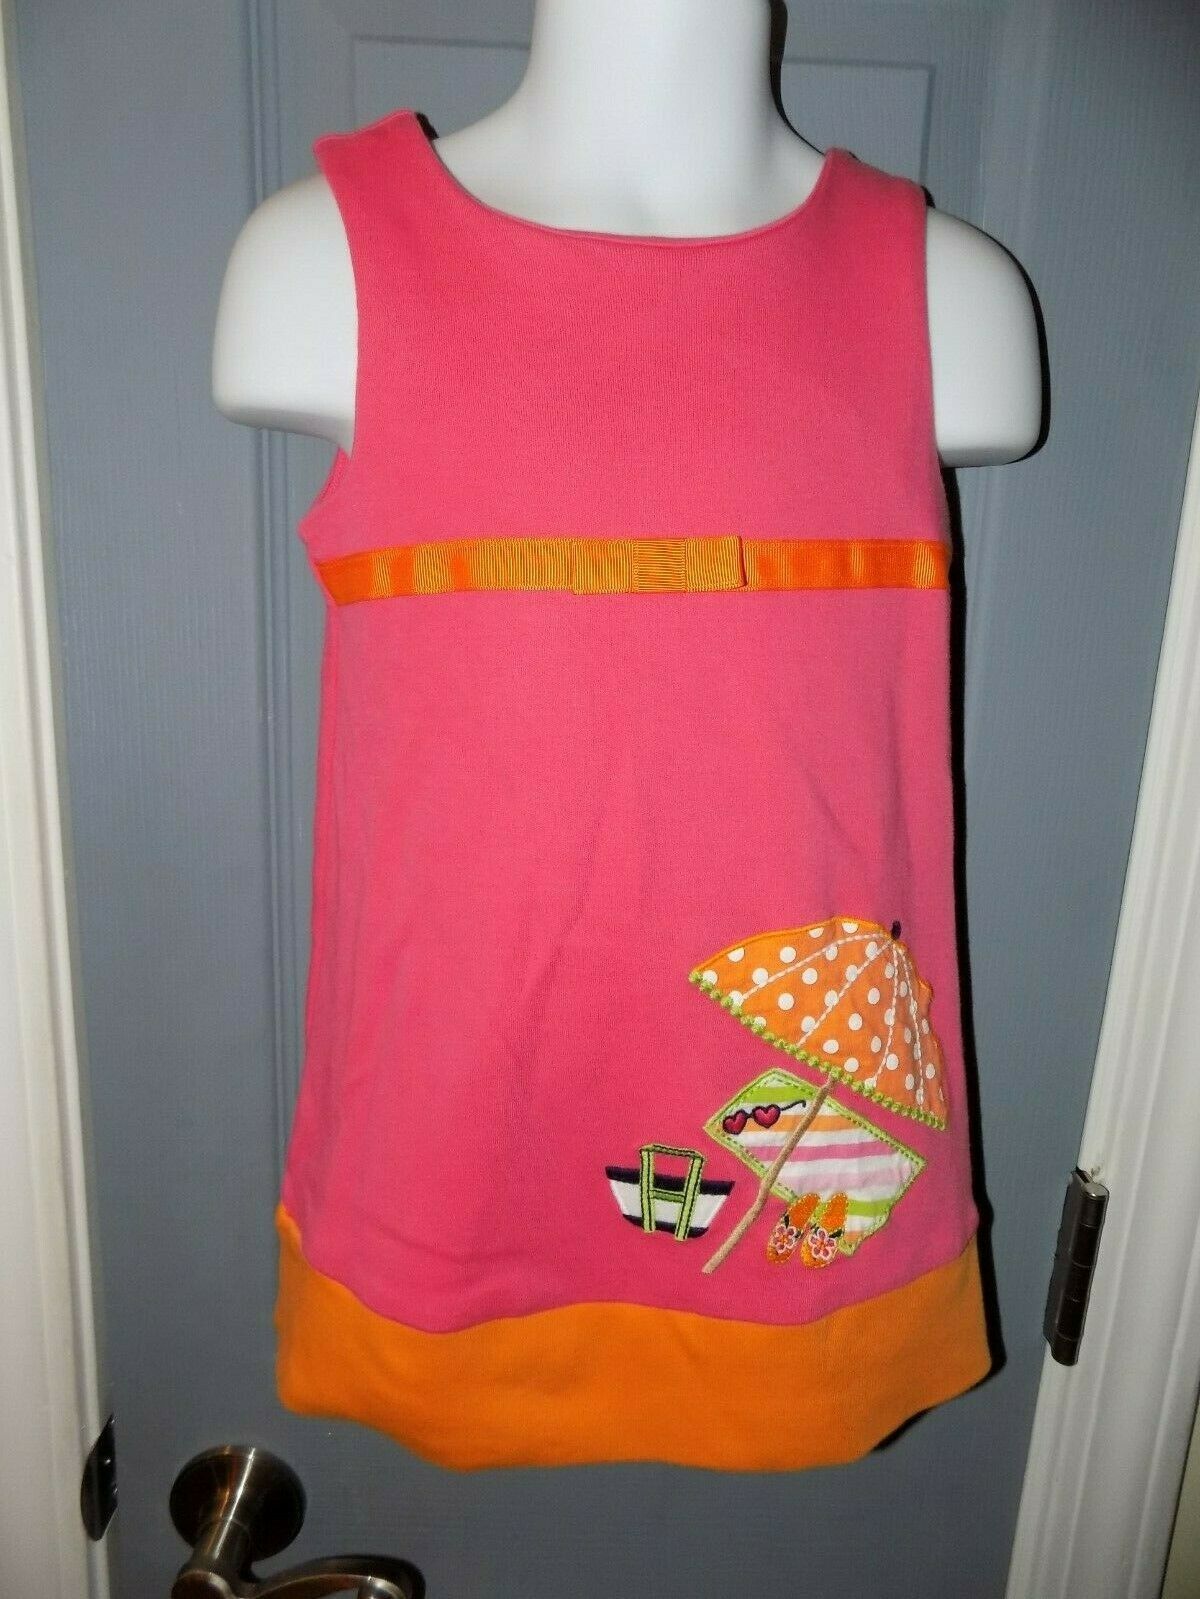 Hartstrings Pink & Orange Dress W/ Beach Scene Applique Size 3T Girl's EUC - $21.50